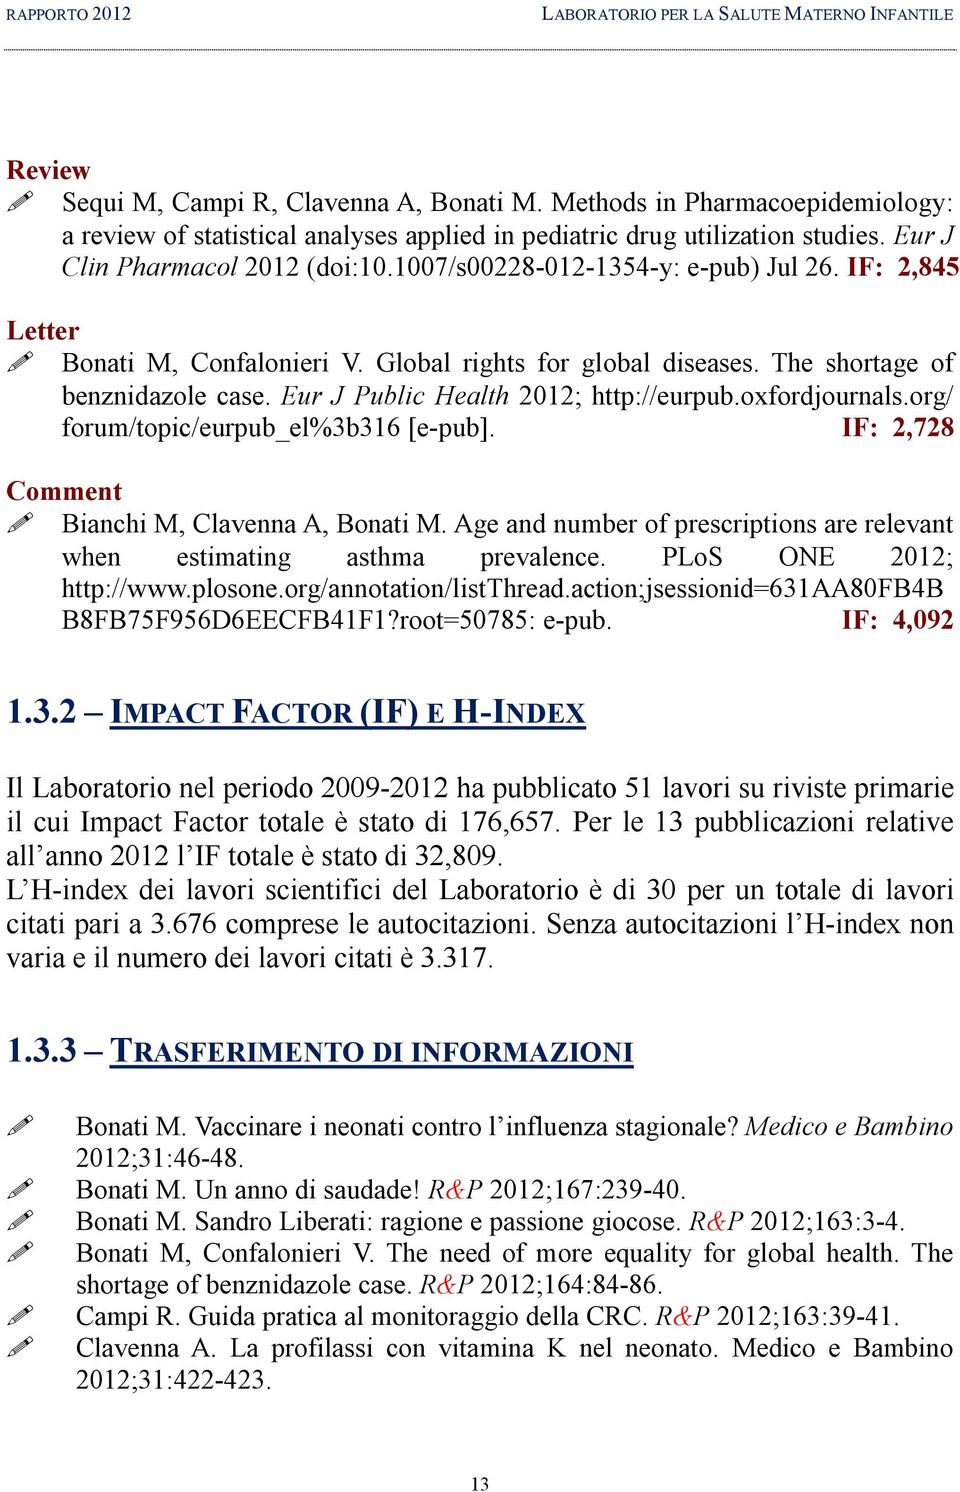 IF: 2,845 Letter Bonati M, Confalonieri V. Global rights for global diseases. The shortage of benznidazole case. Eur J Public Health 2012; http://eurpub.oxfordjournals.